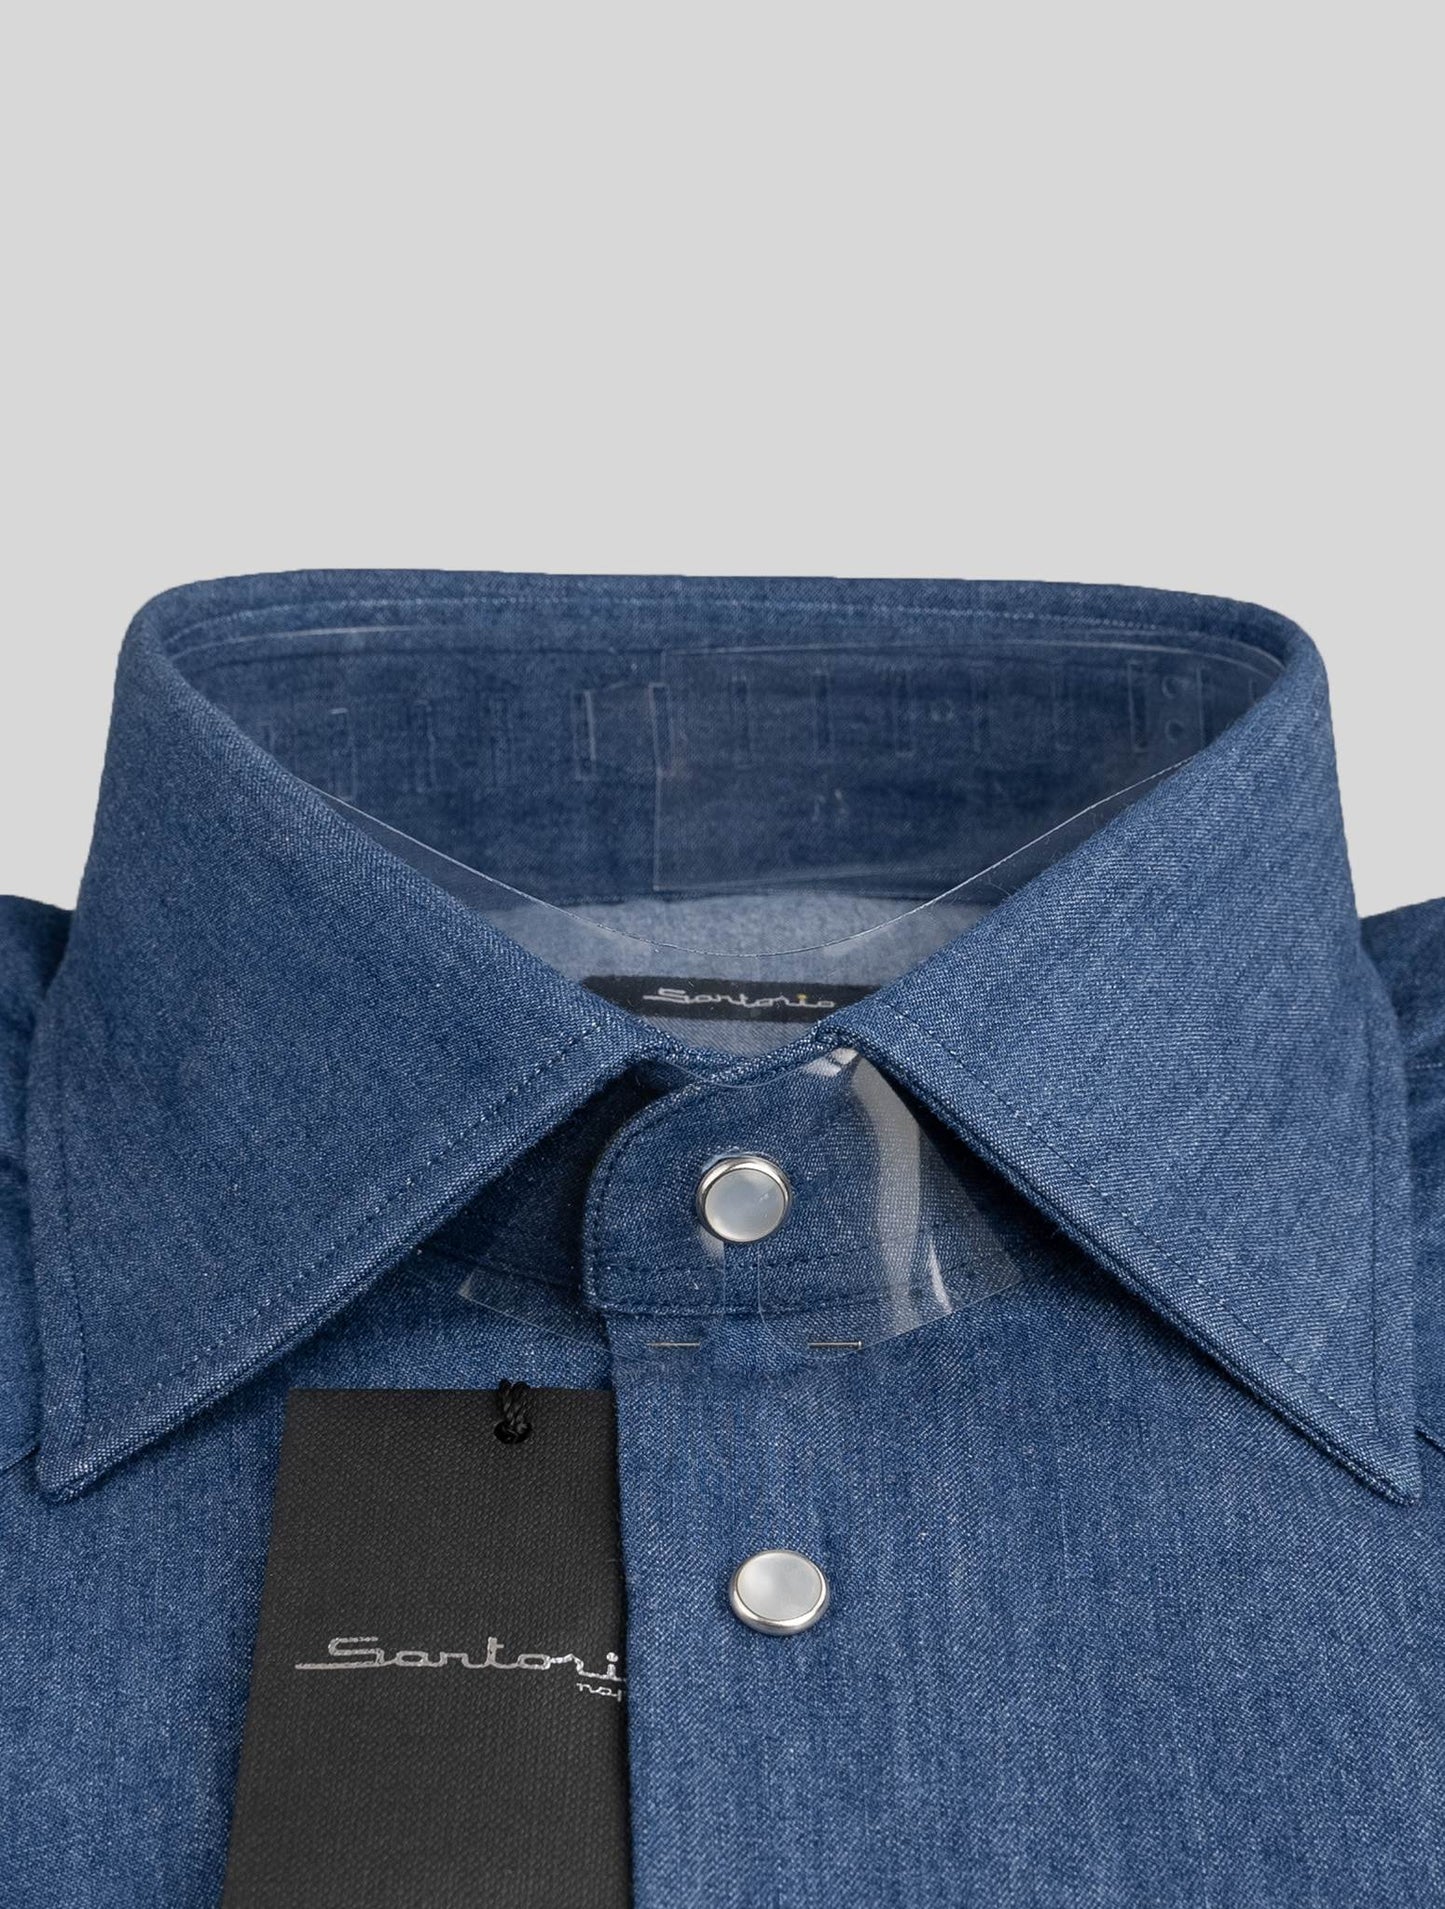 Sartorio Napoli Blue Cotton Denim Shirt